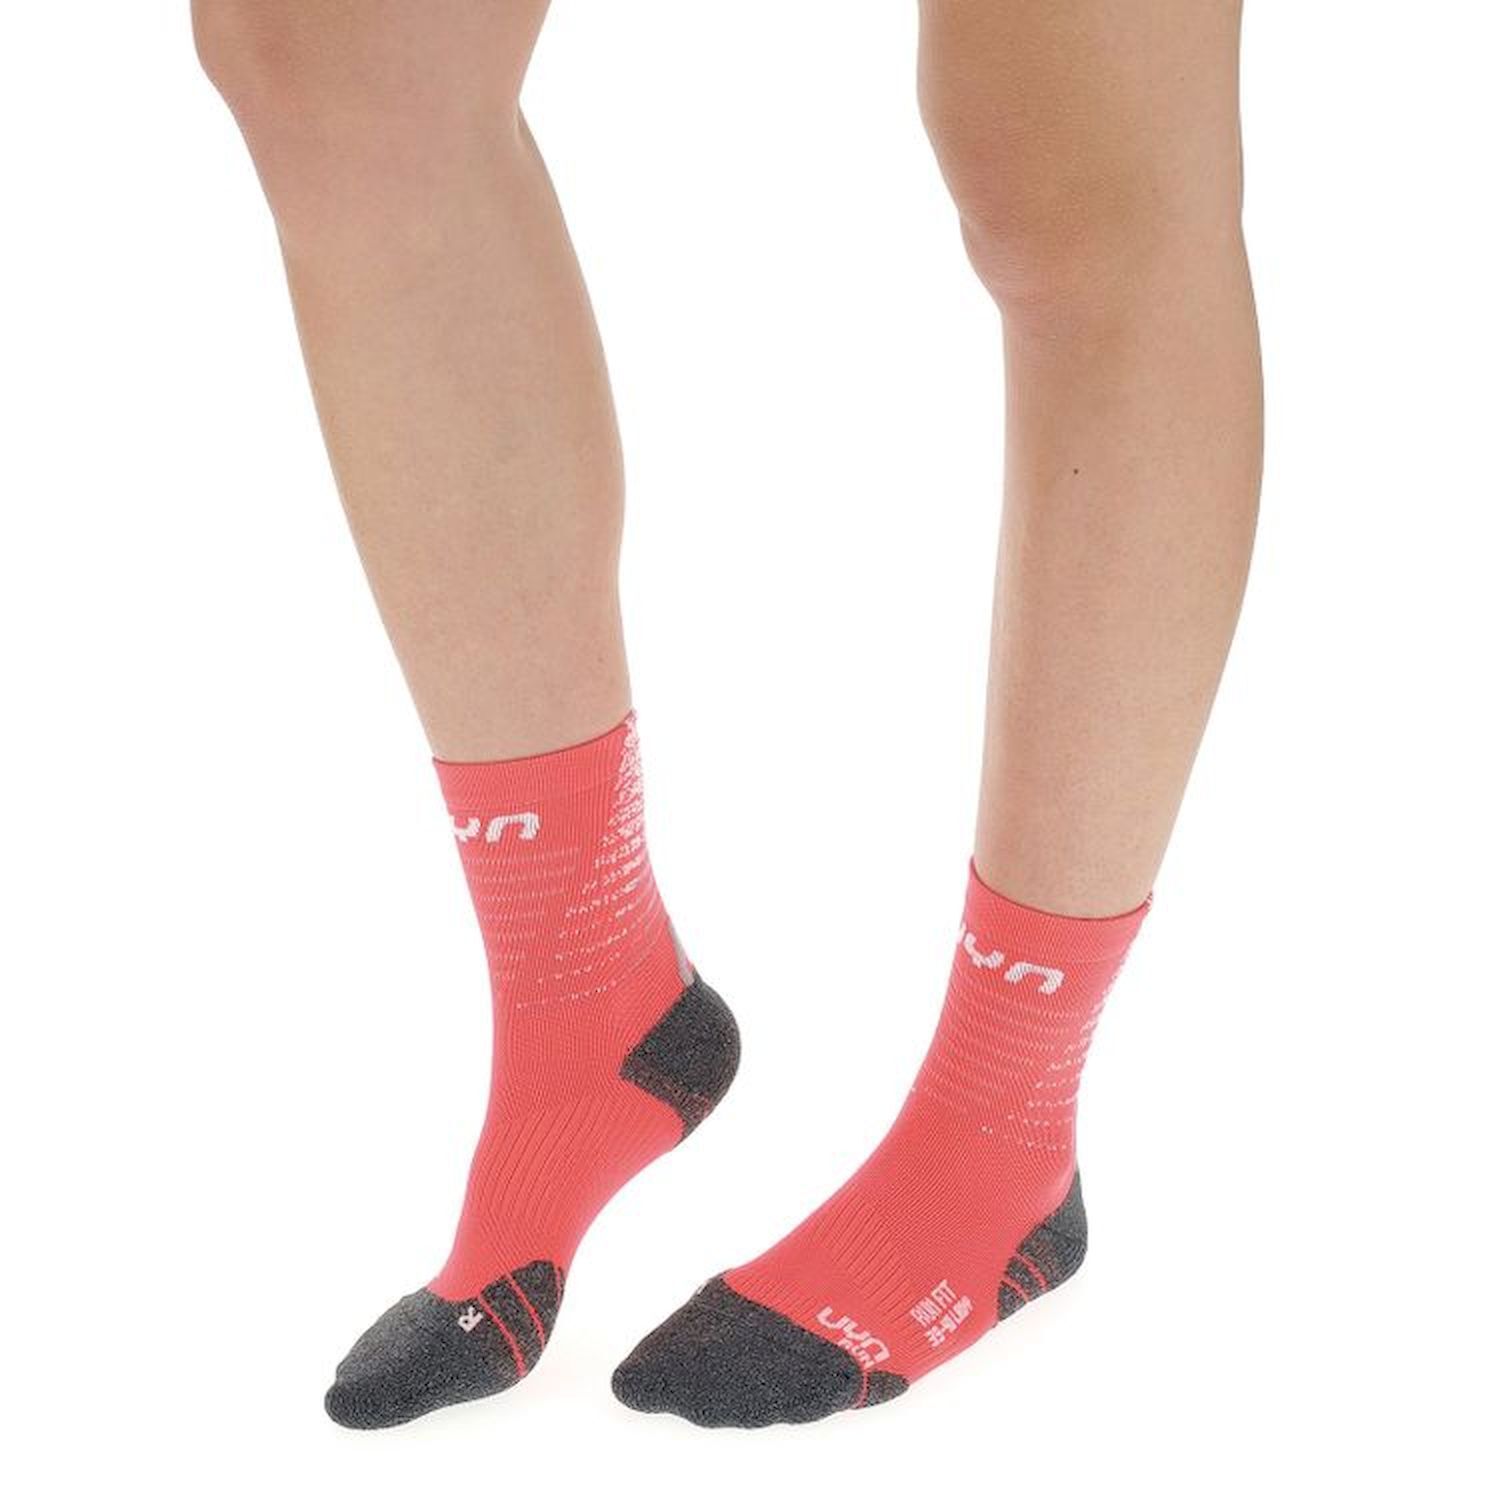 Uyn Run Fit Socks - Running socks - Women's